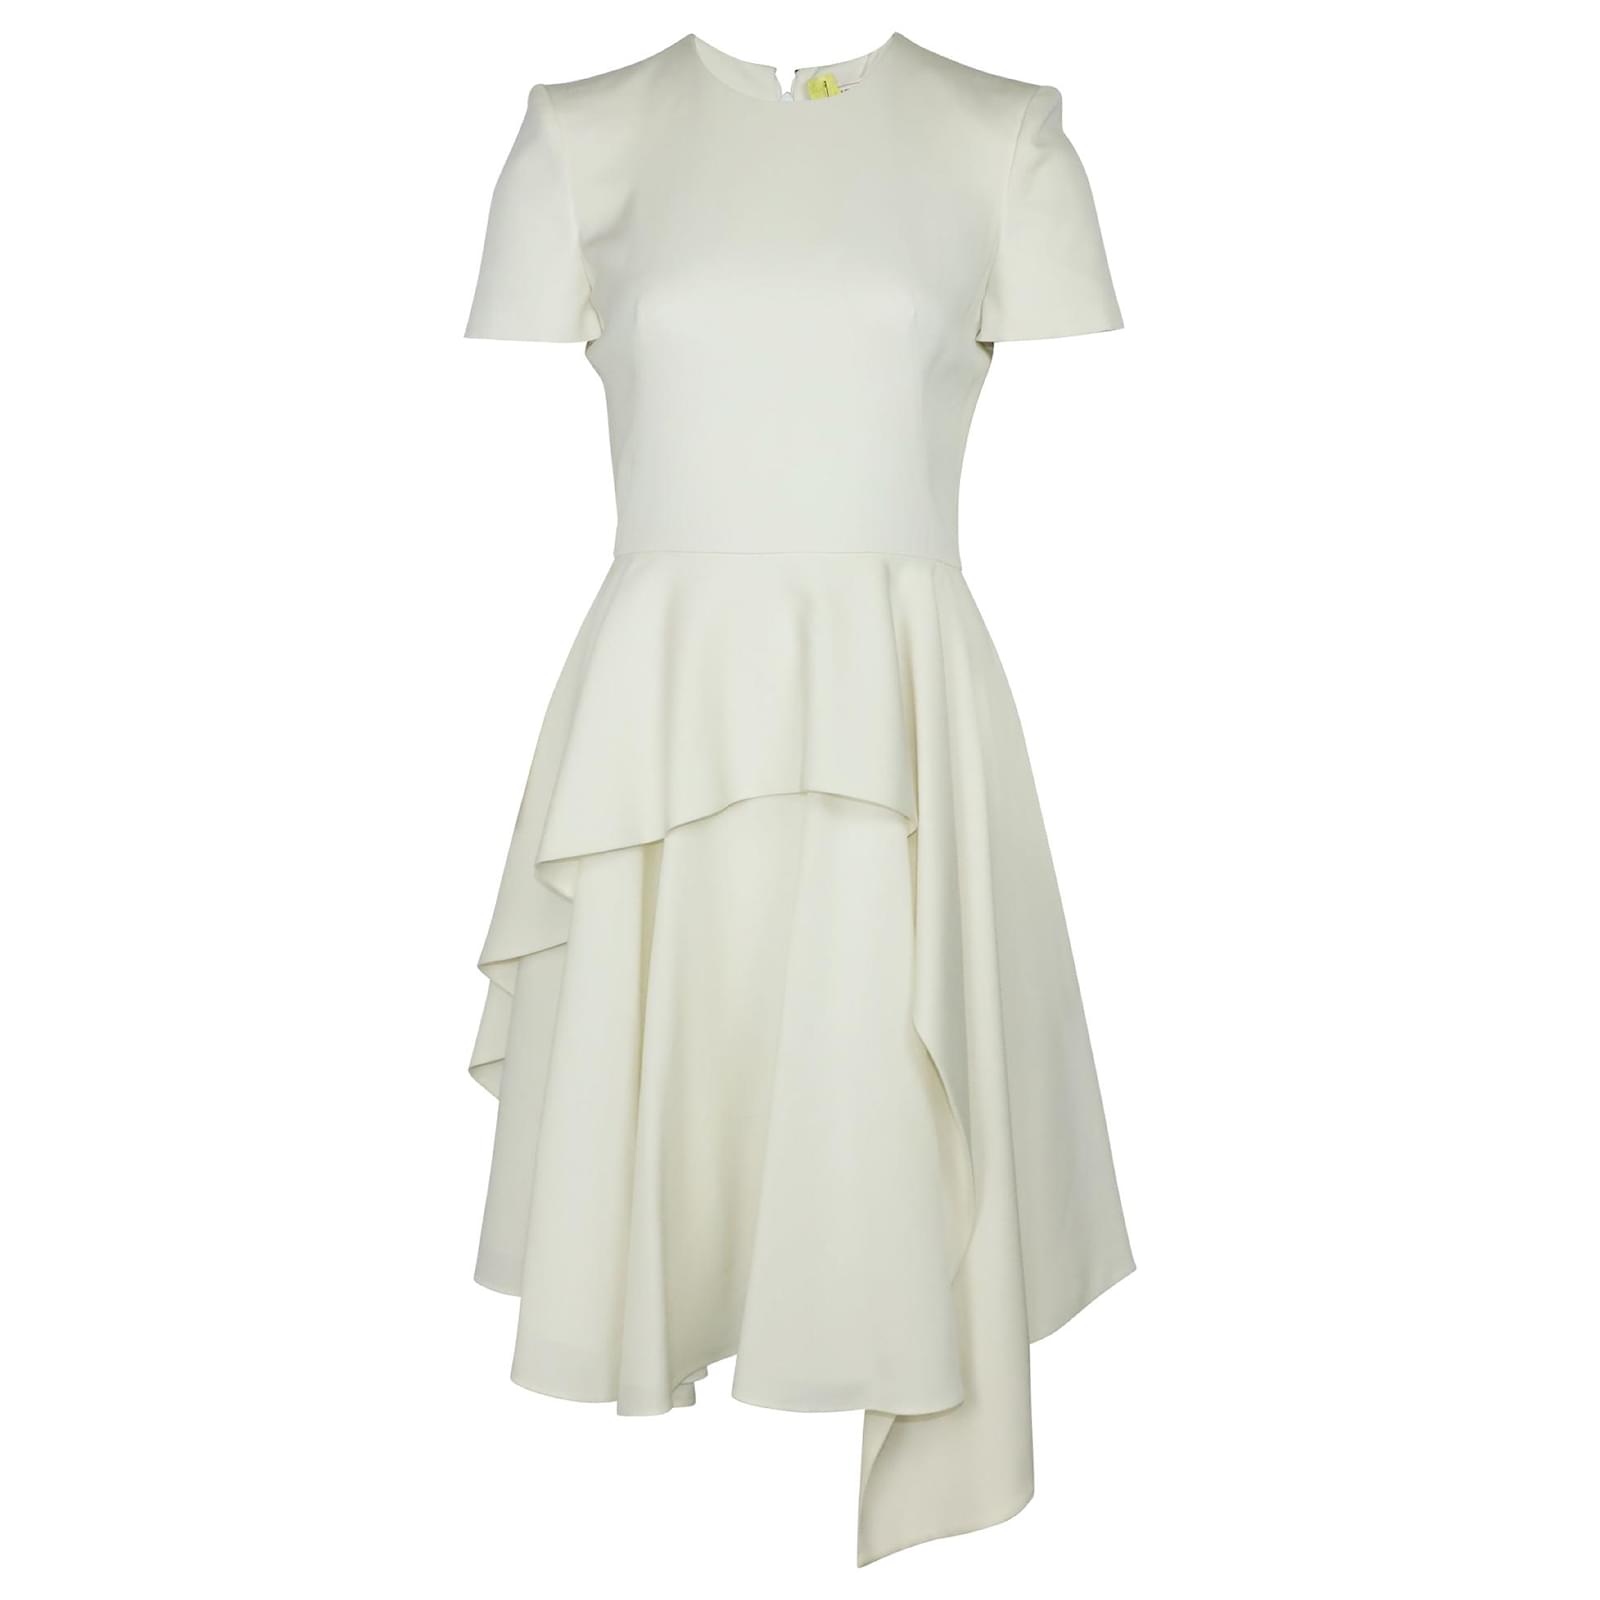 Alexander McQueen Asymmetric Layered Dress in White Wool Cashmere ref ...